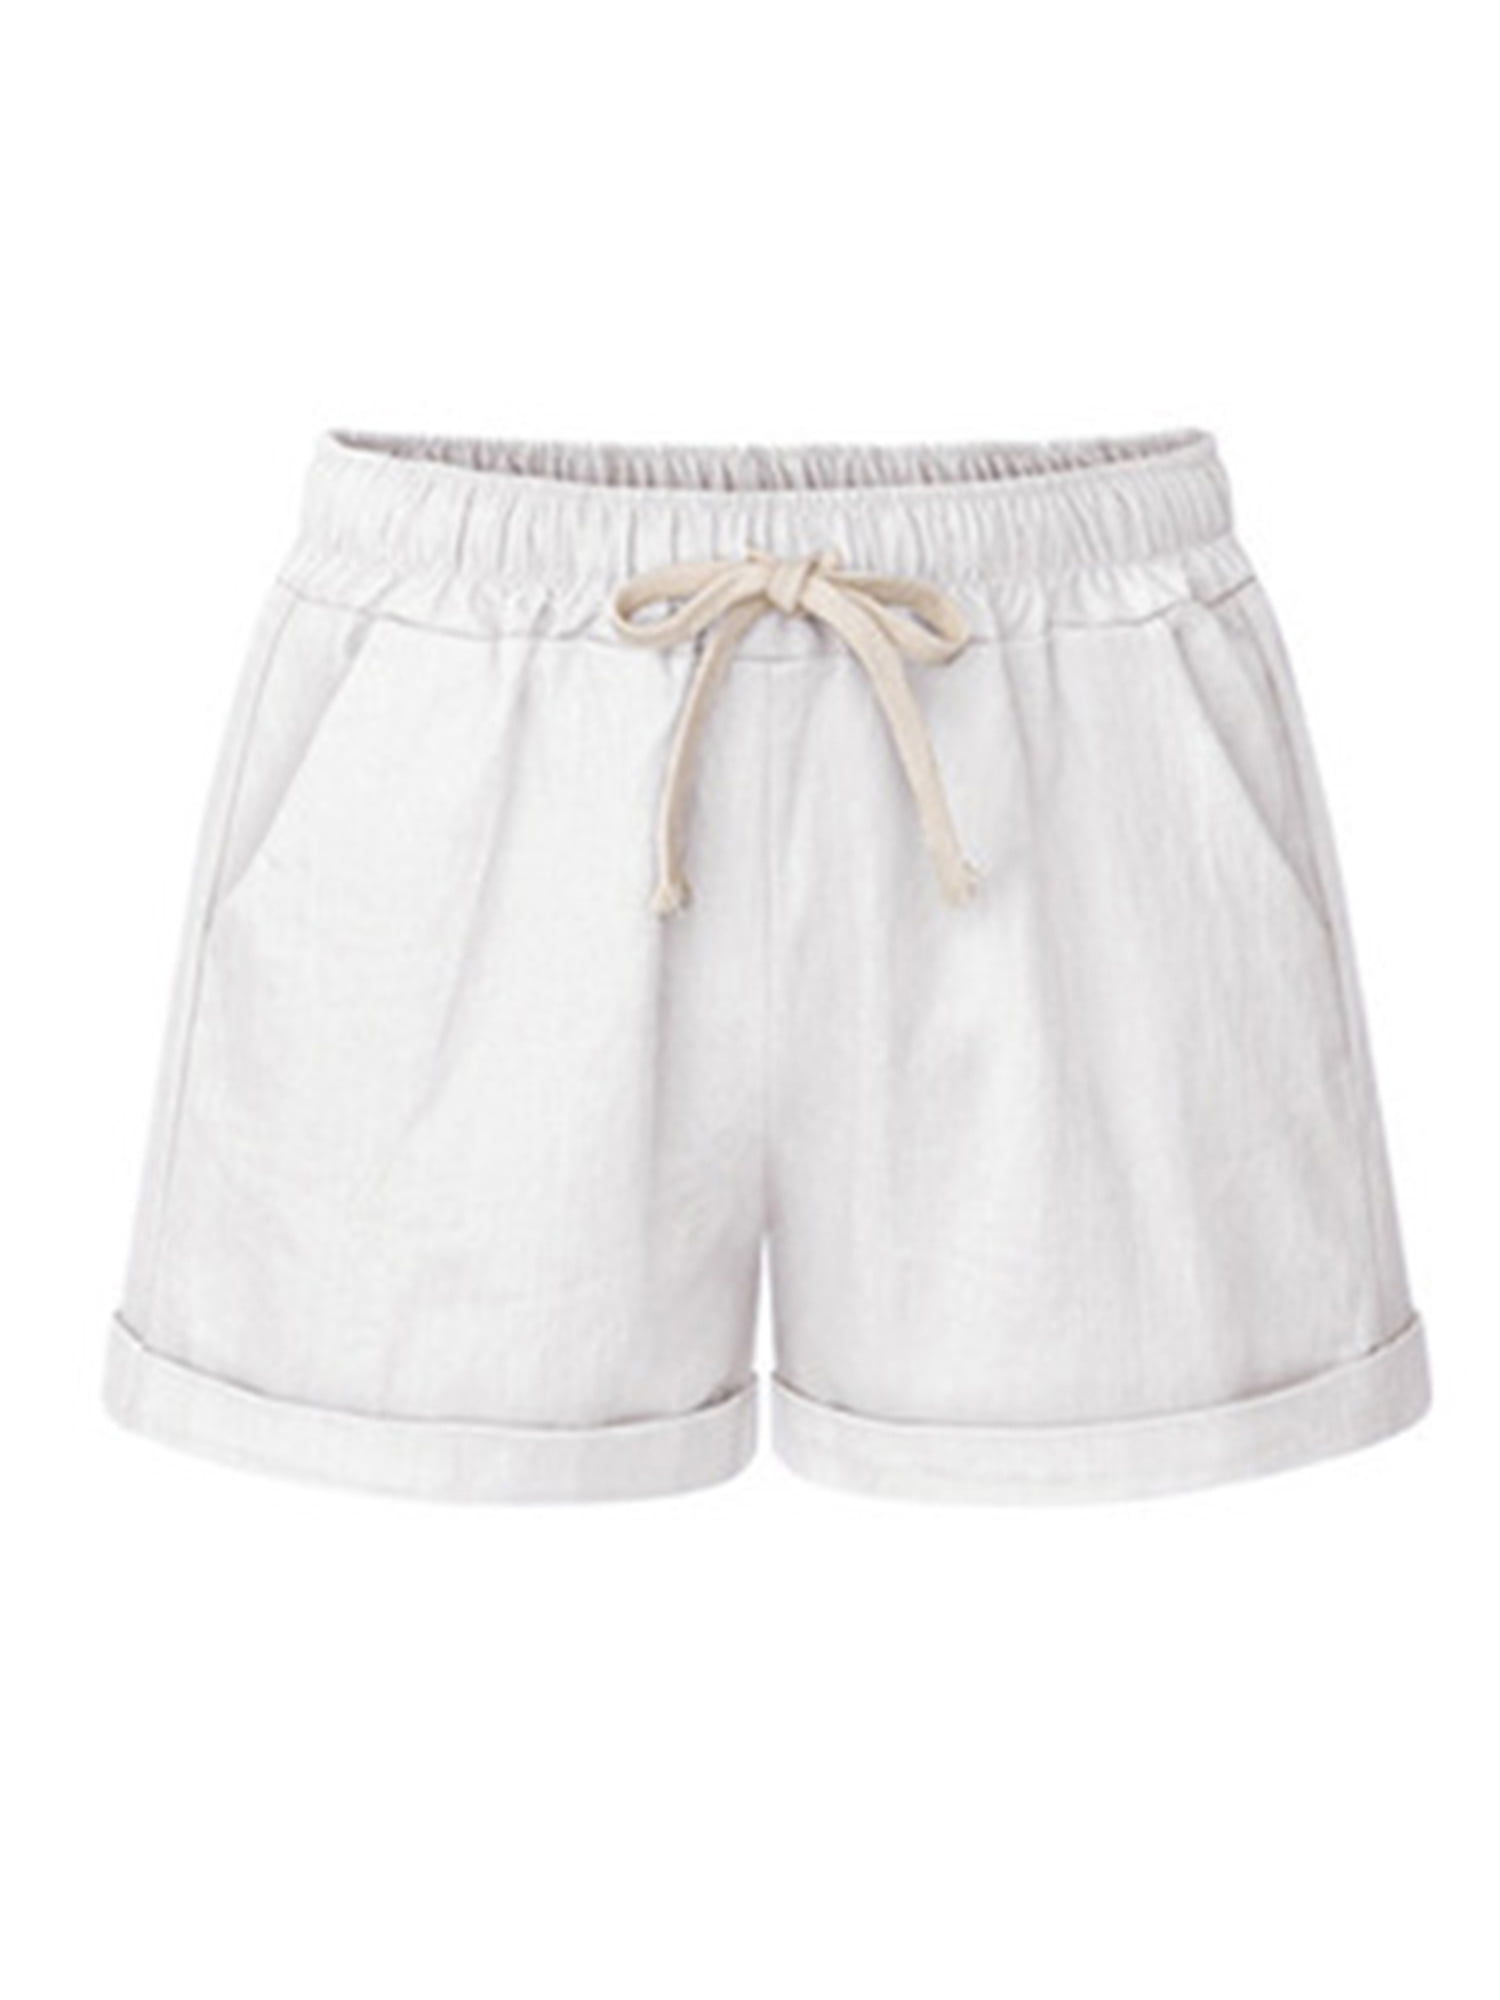 Womens Ladies Elastic Waist Drawstring Beach Loose Shorts Hot Pants Plus Size